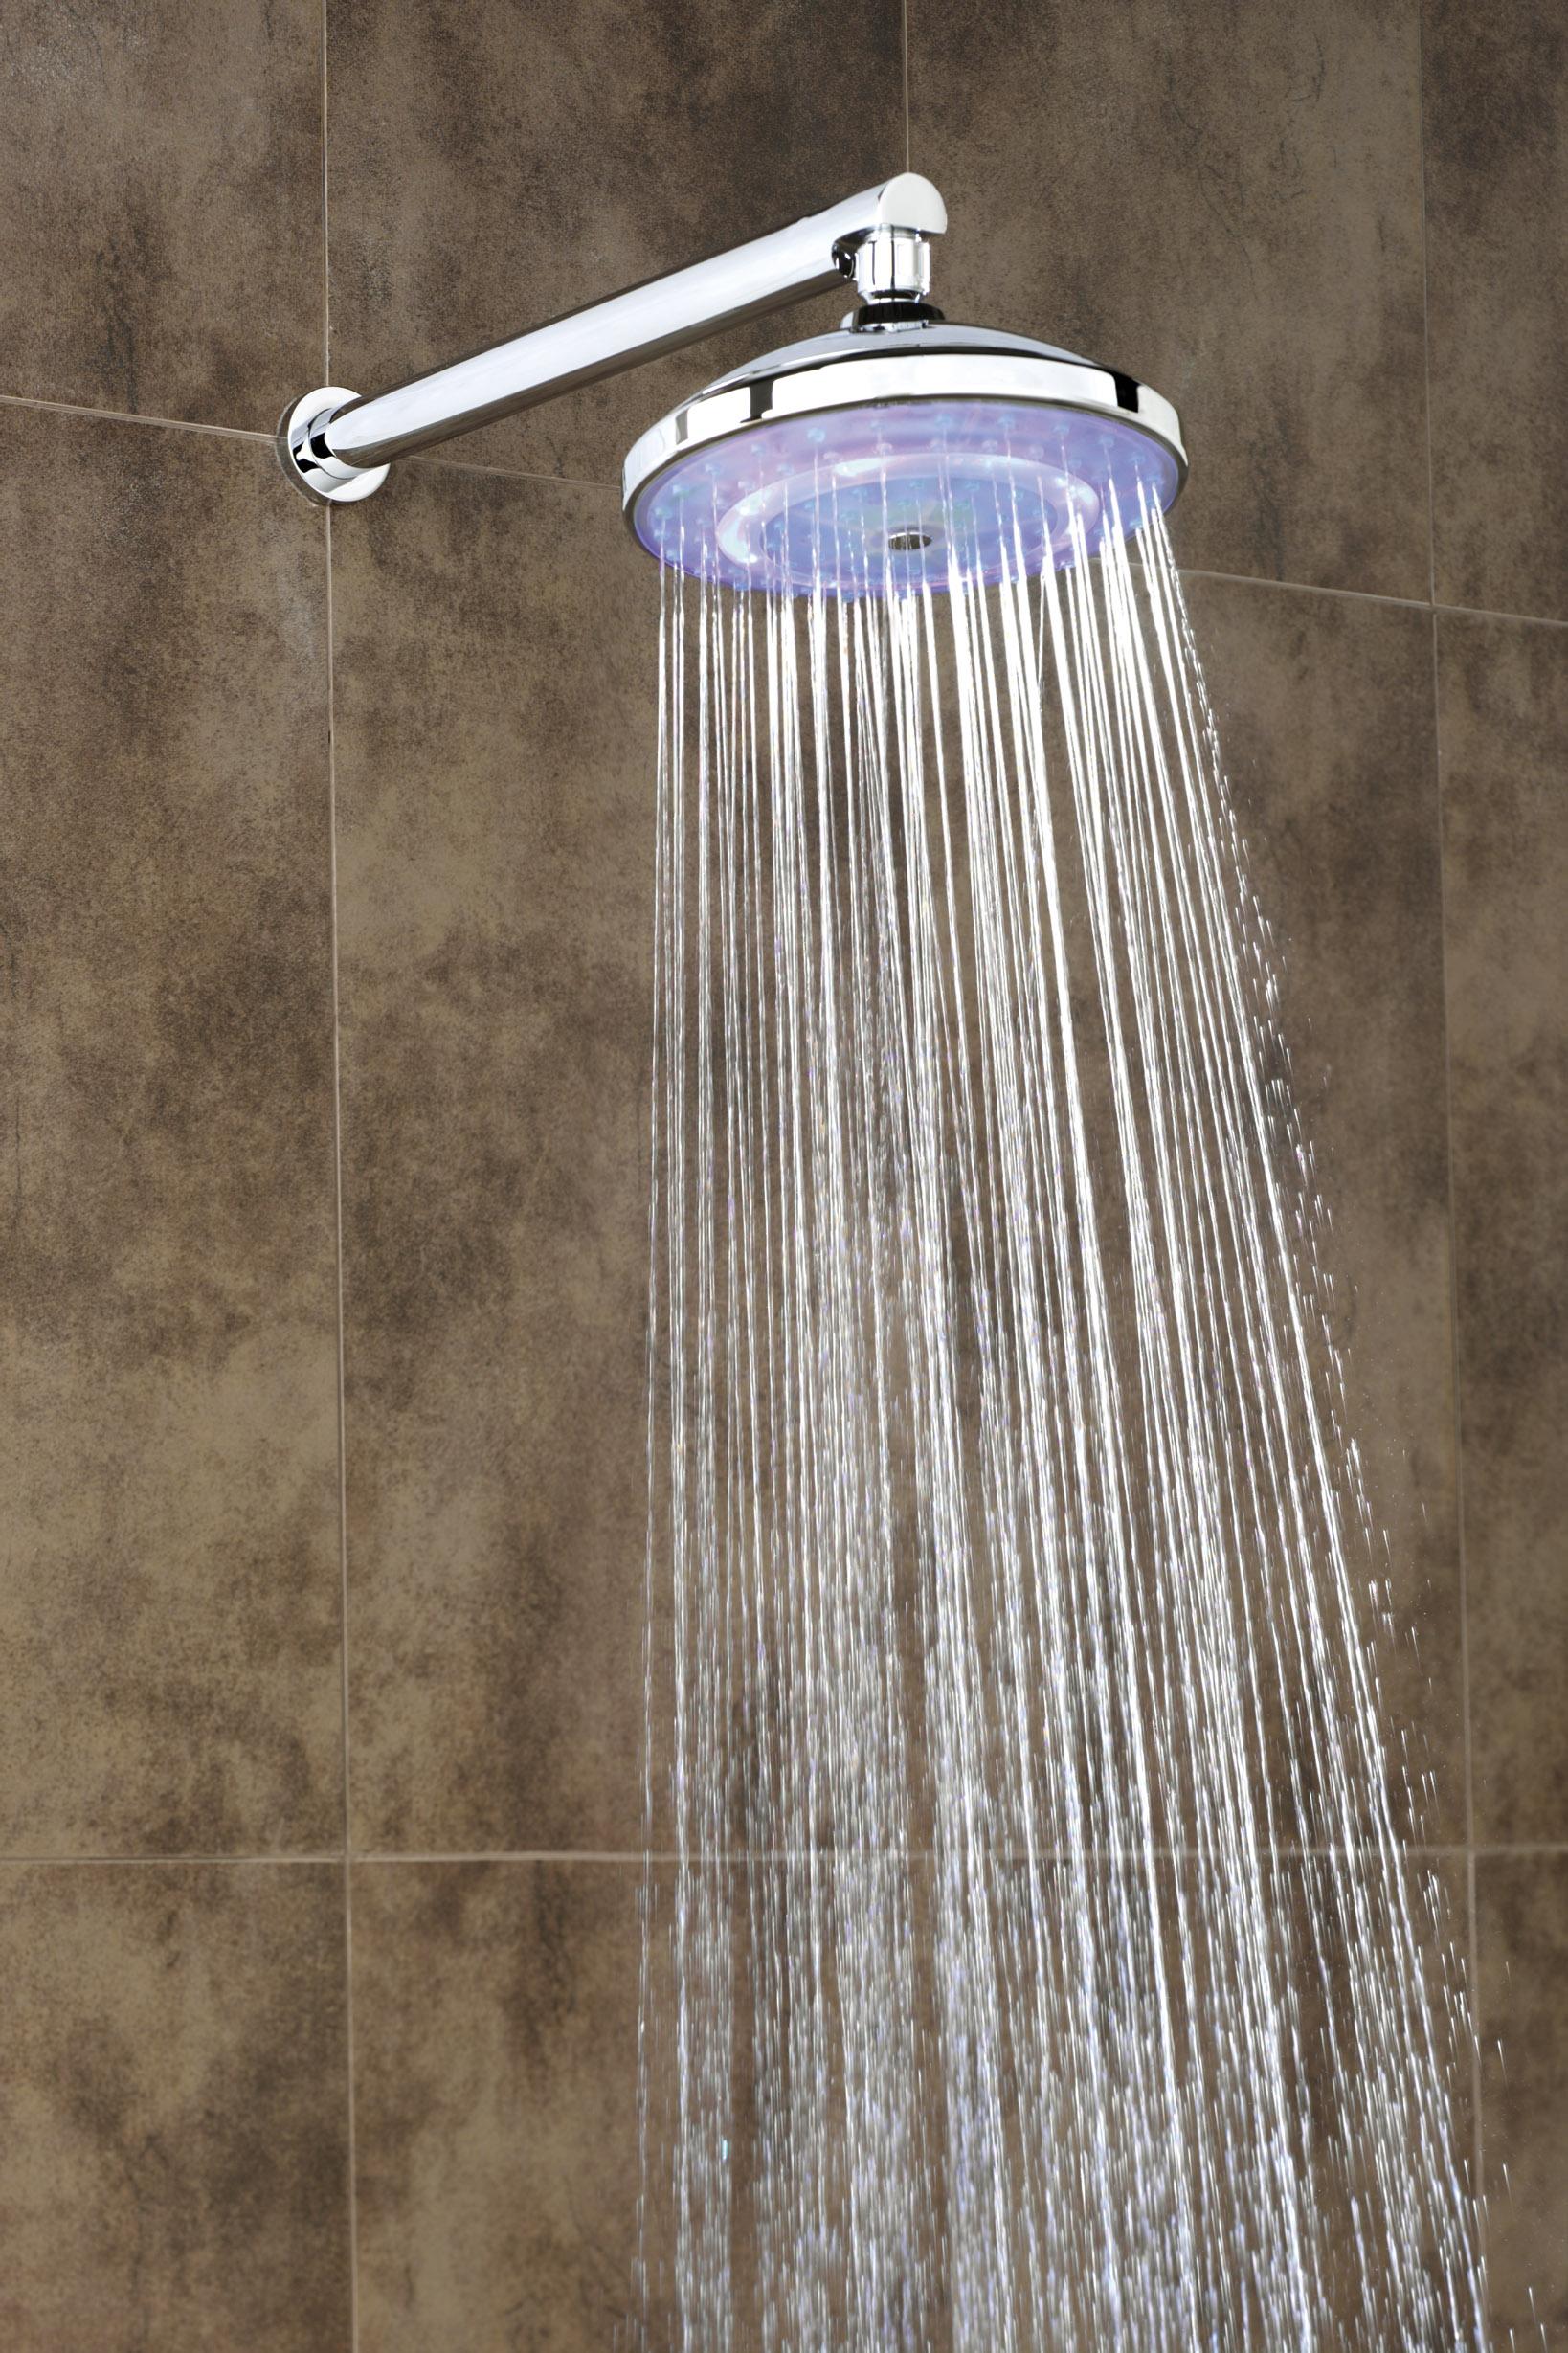 Shower-Arm.jpg